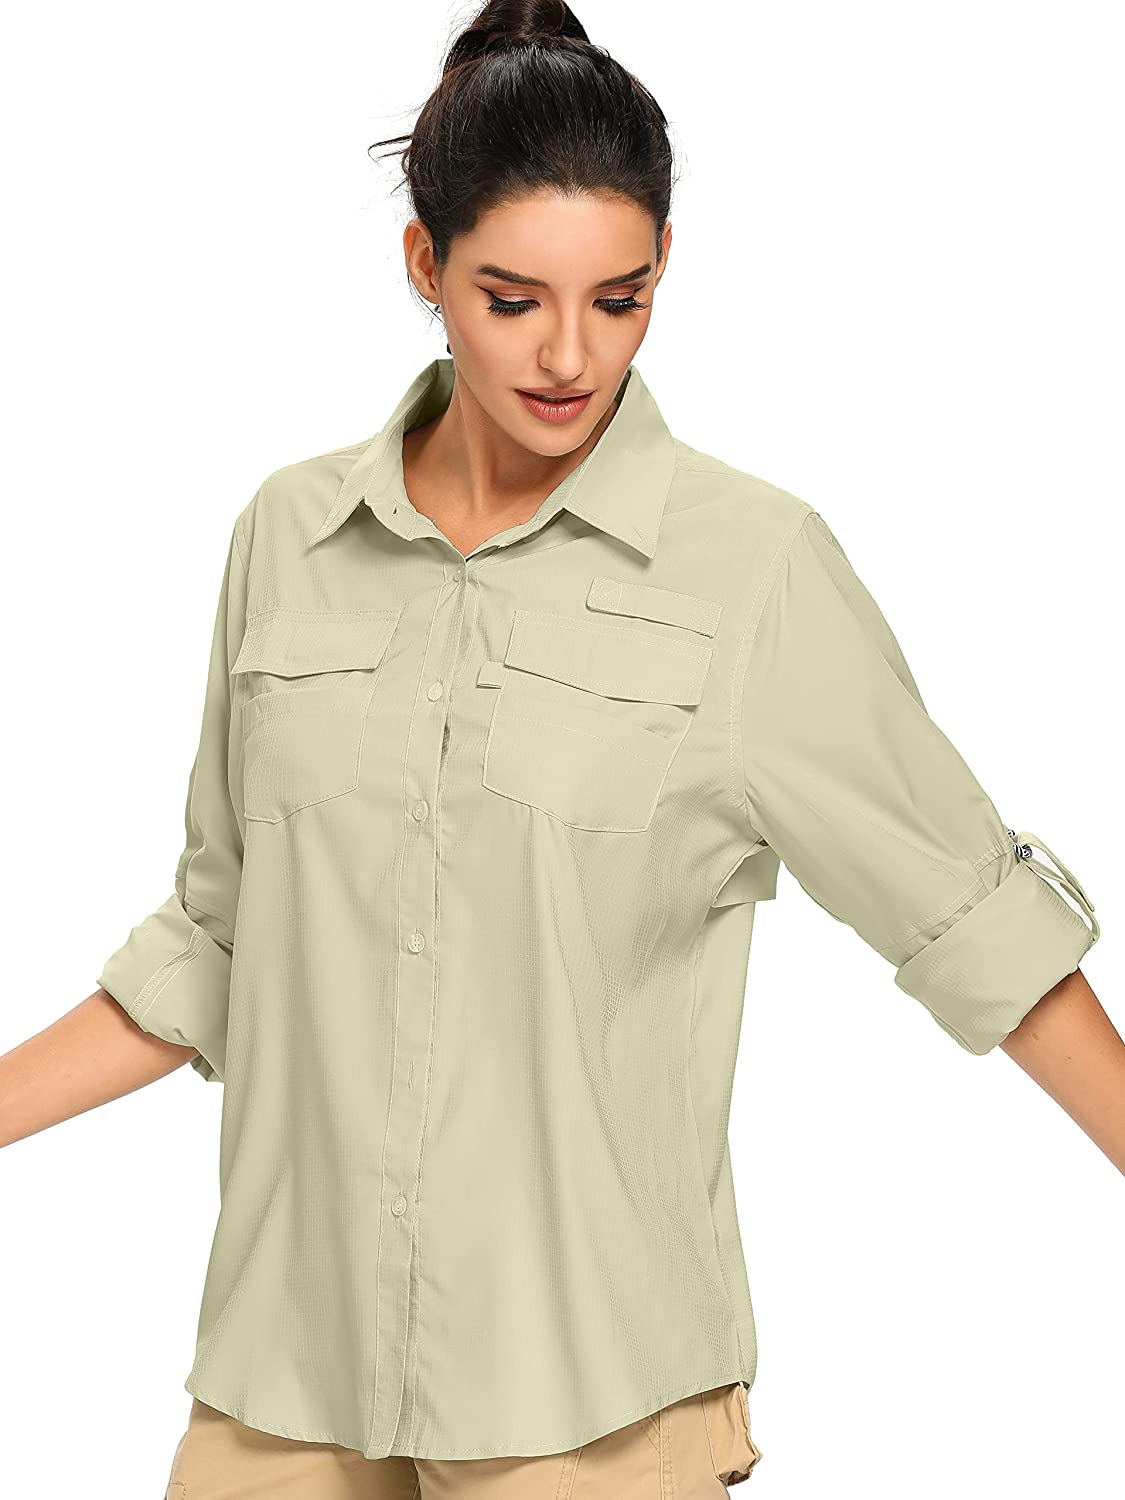 Women's Long Sleeve Safari Clothes UPF 50+ Hiking Fishing Shirts